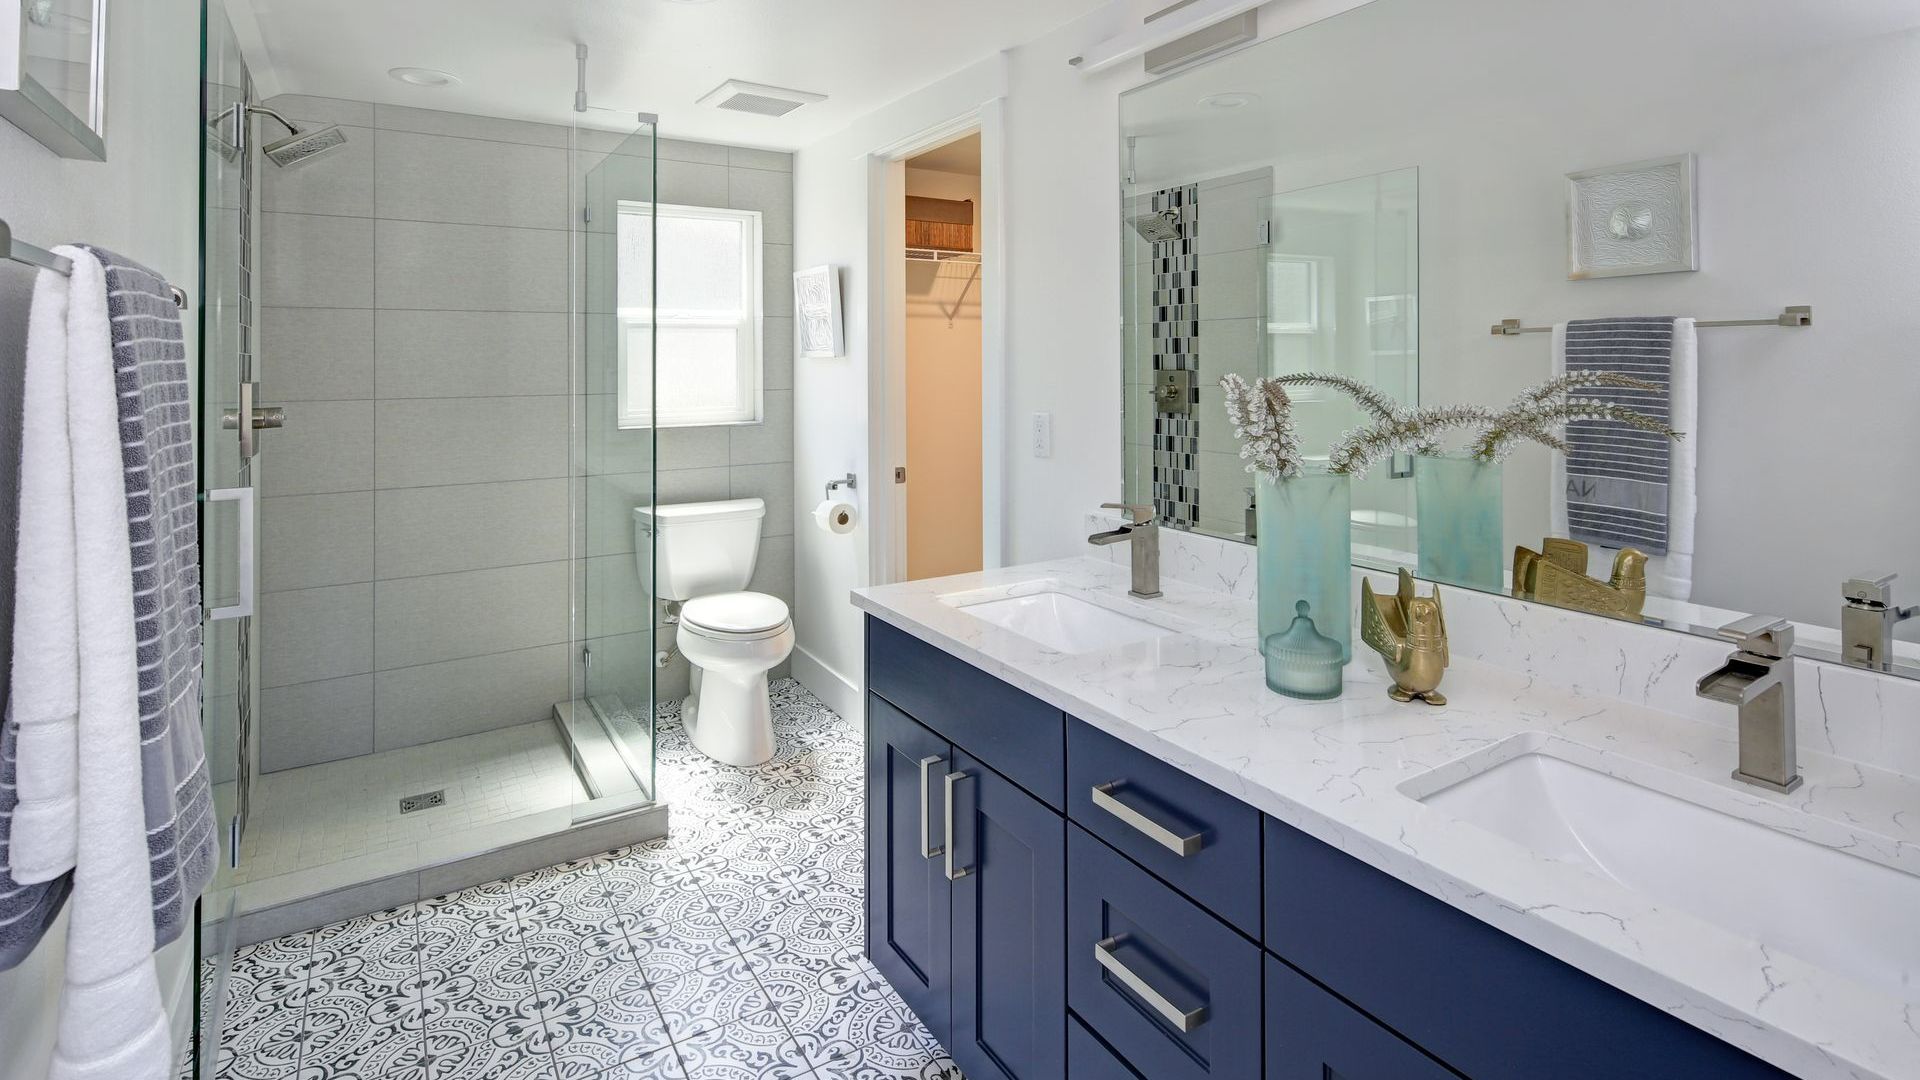 Salle de bains avec douche et meuble double vasque bleu